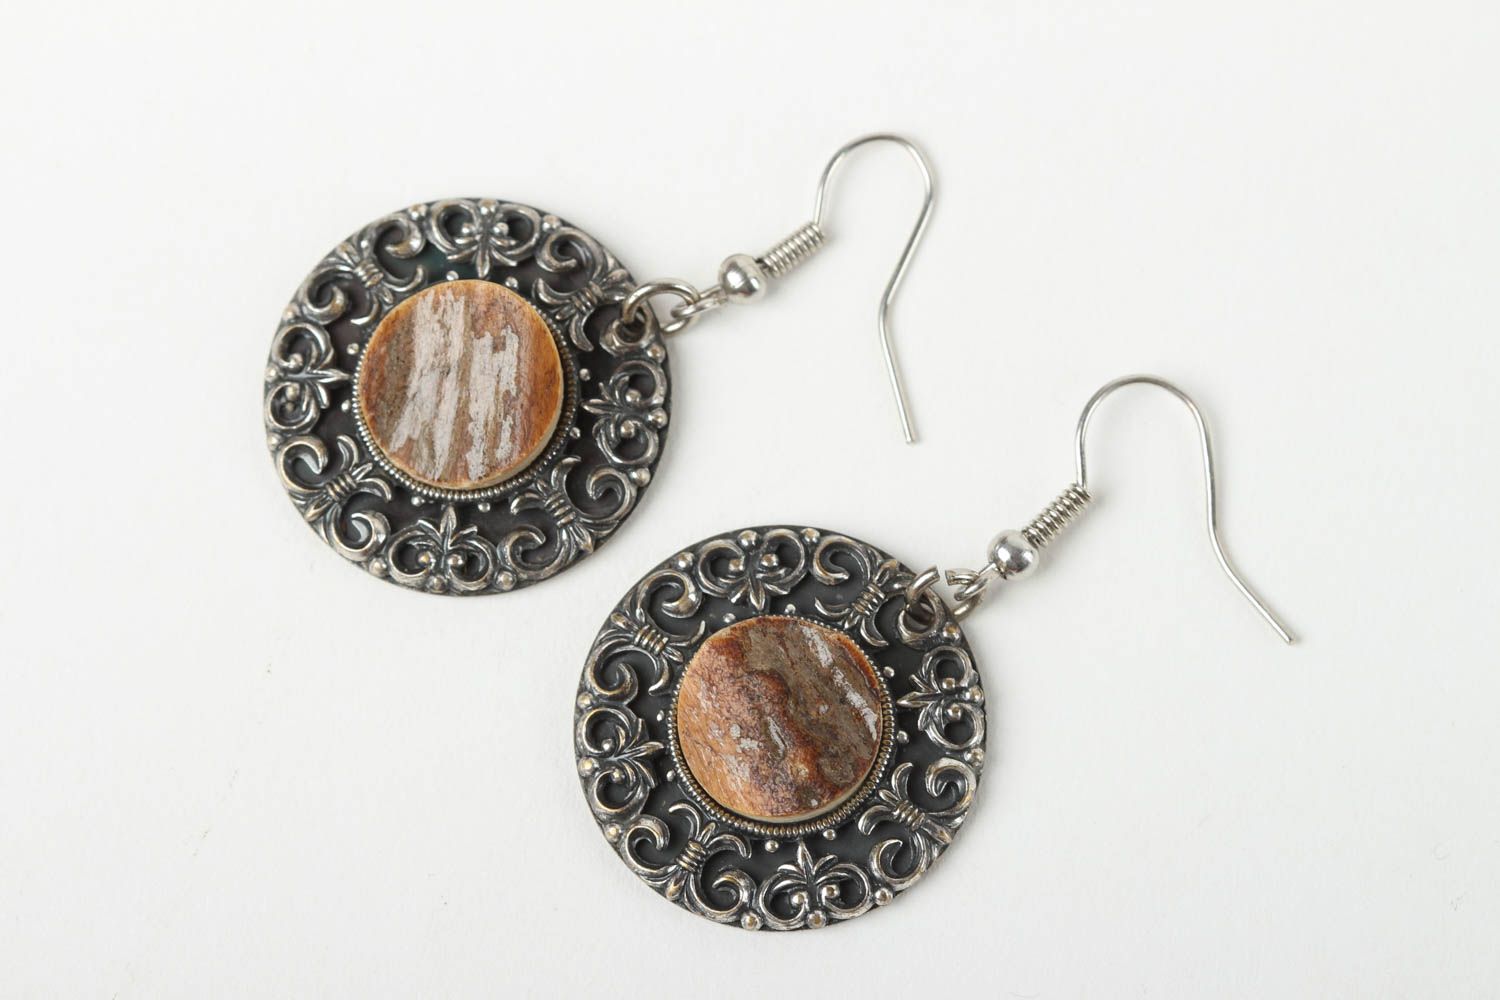 Handmade designer earrings stylish elegant jewelry designer earrings with charms photo 2